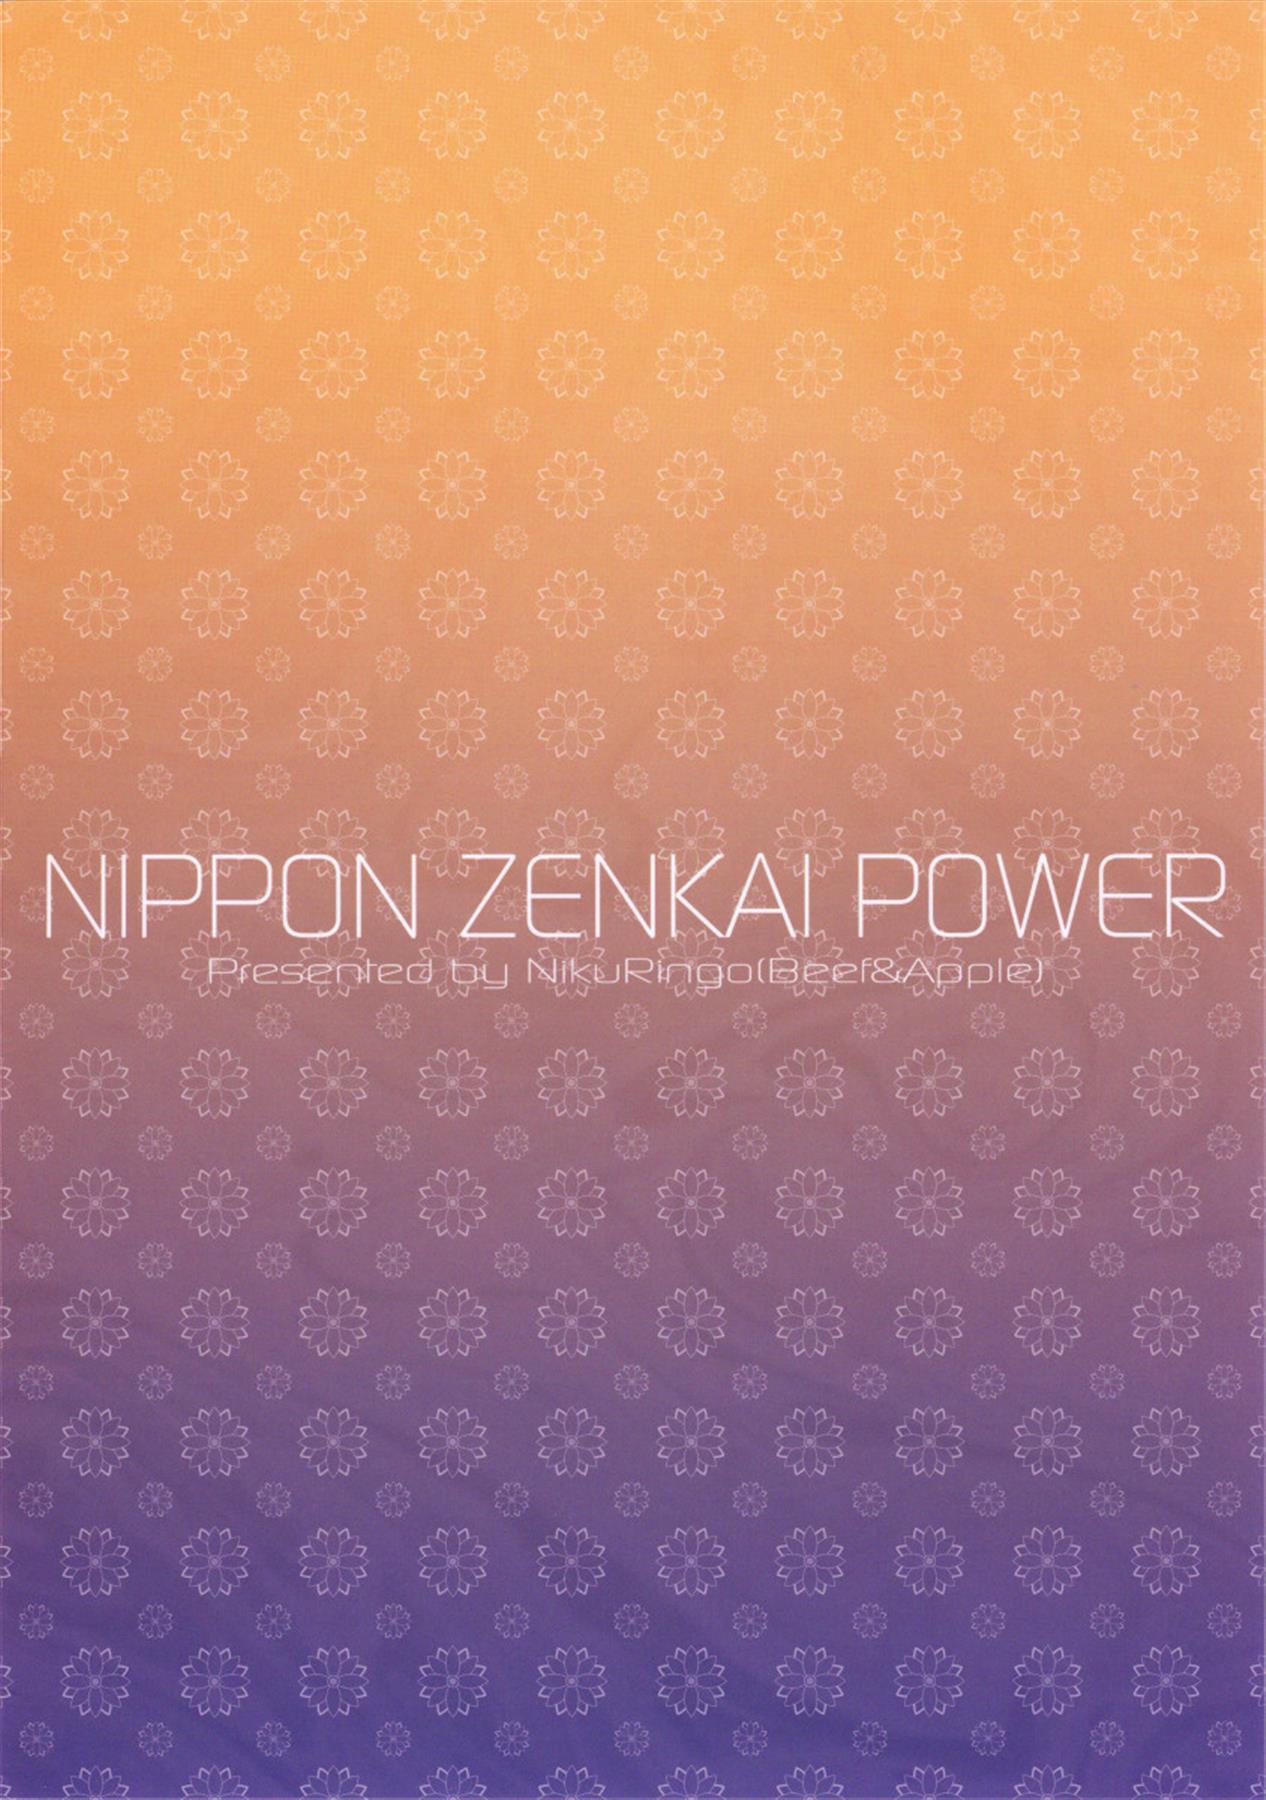 Nippon ZENKAI Power